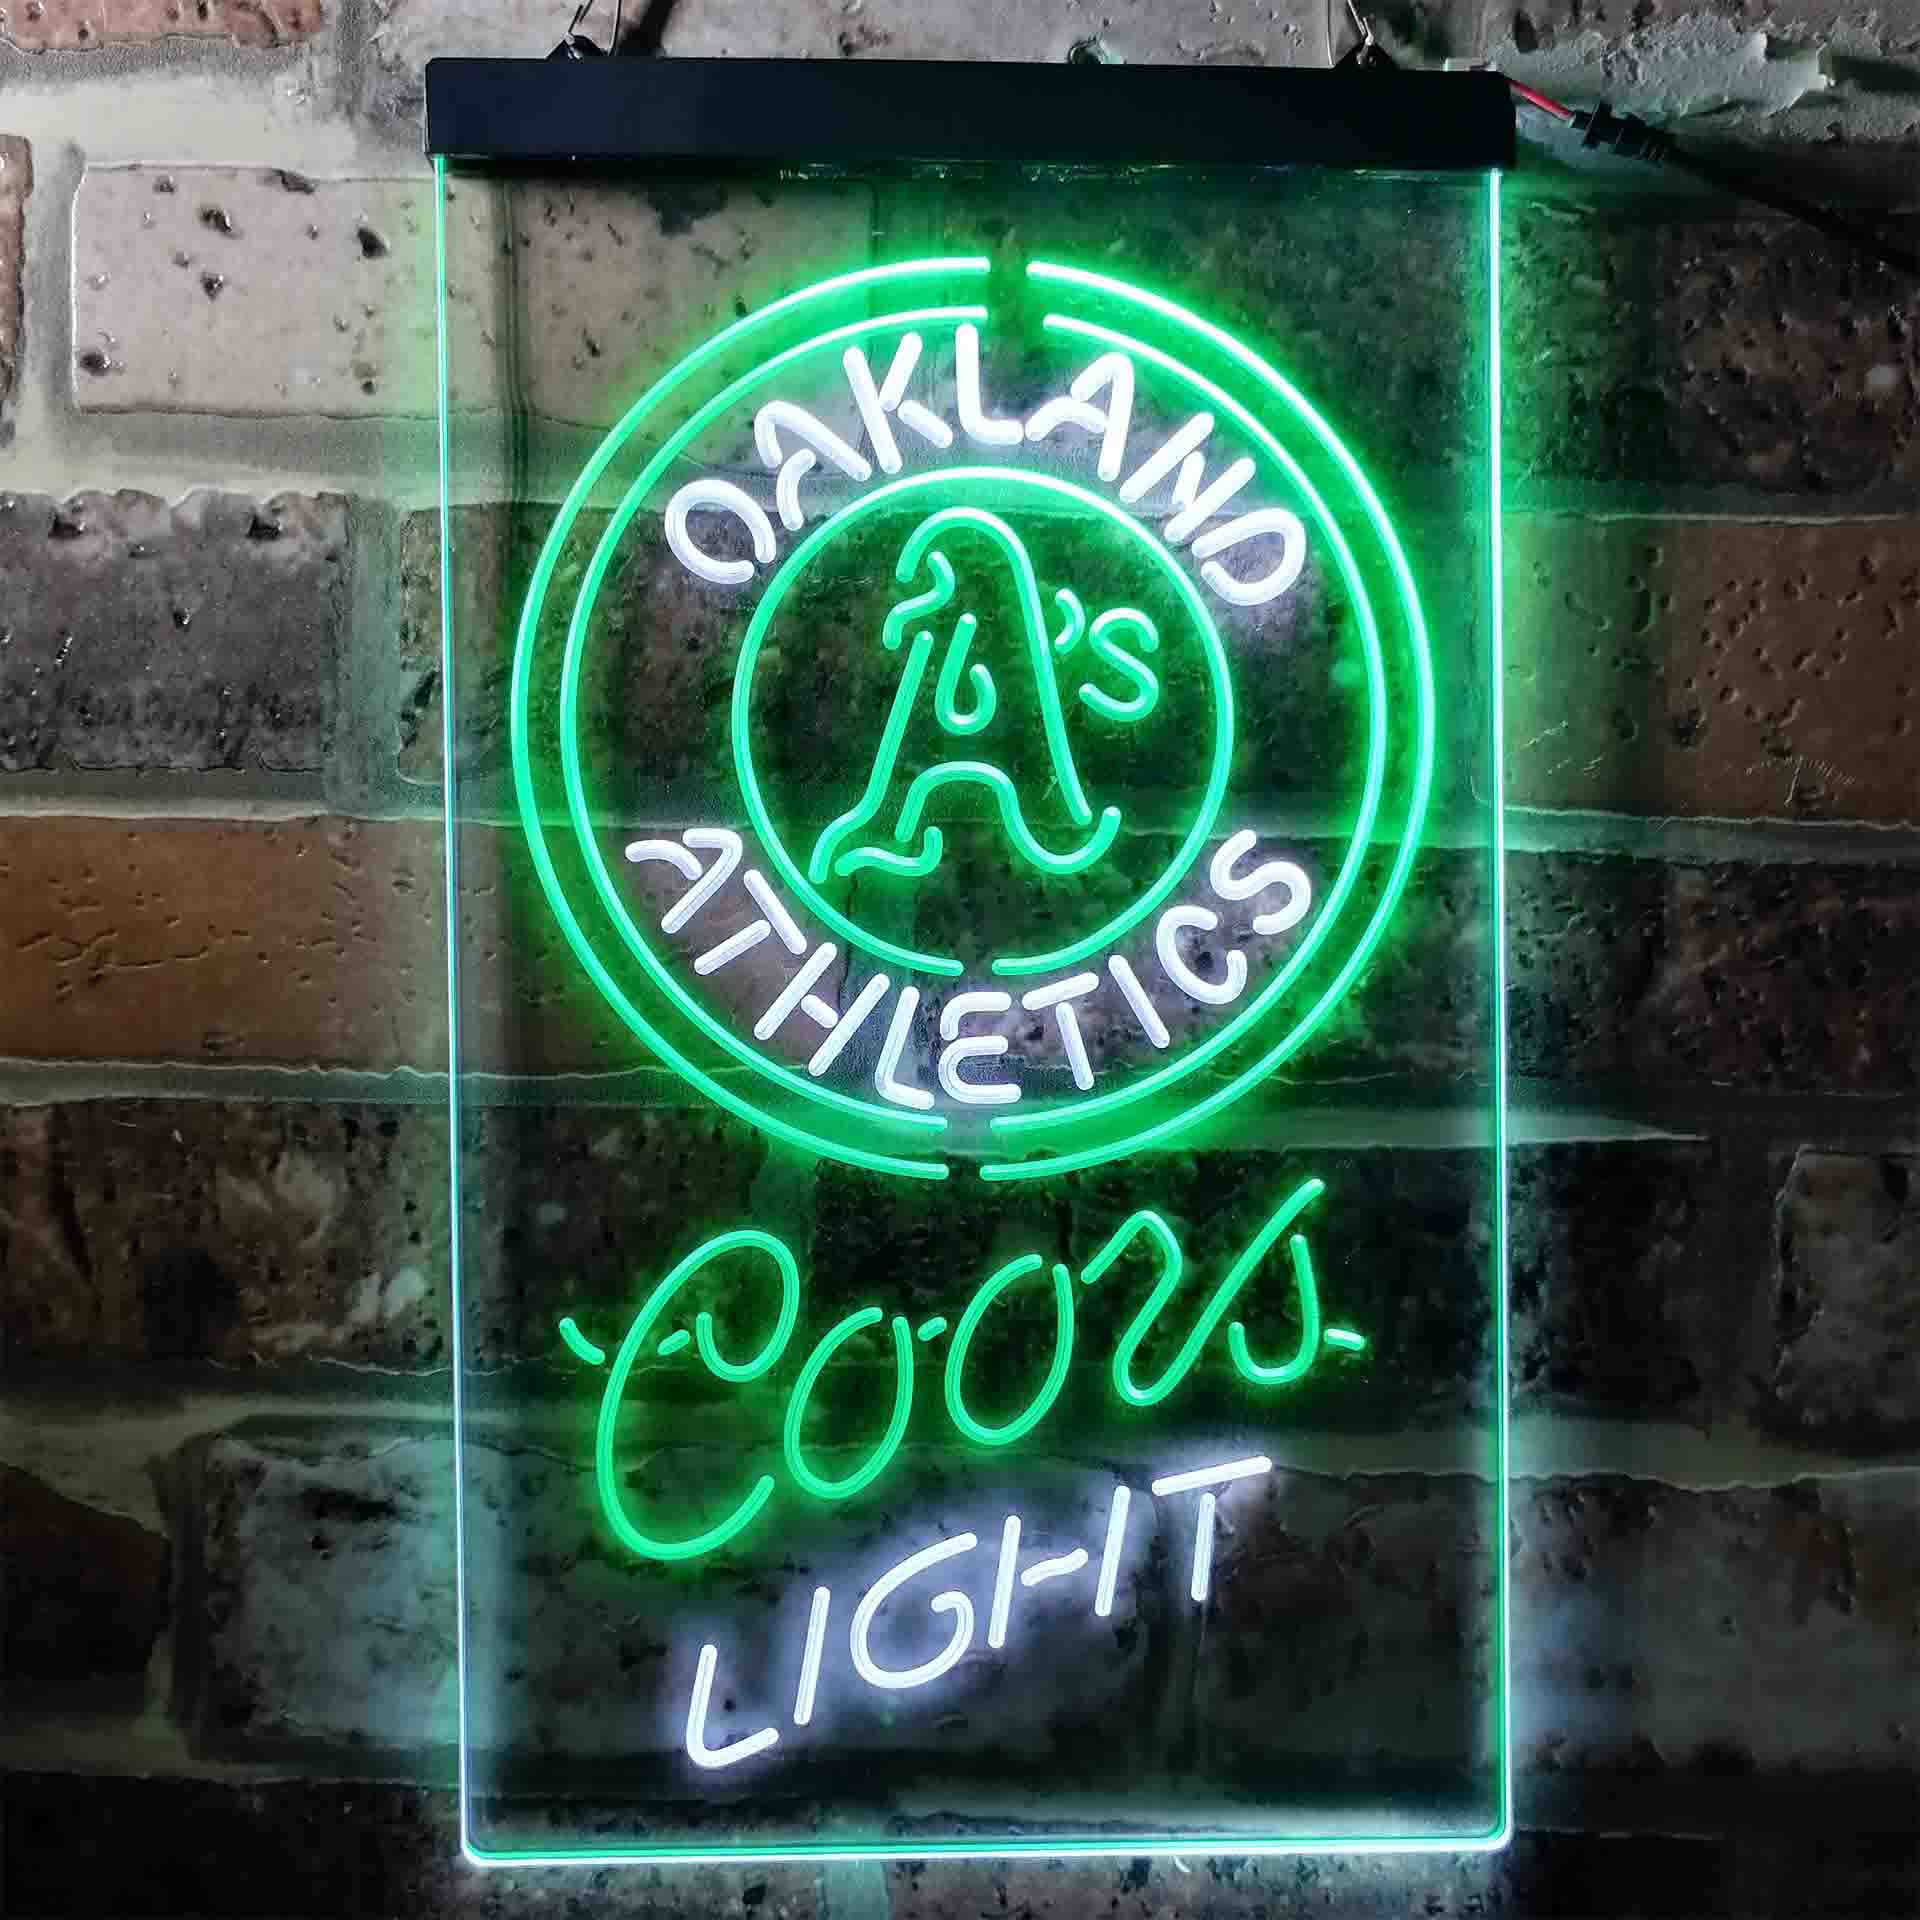 Oakland Athletics Coors Light Neon-Like LED Sign